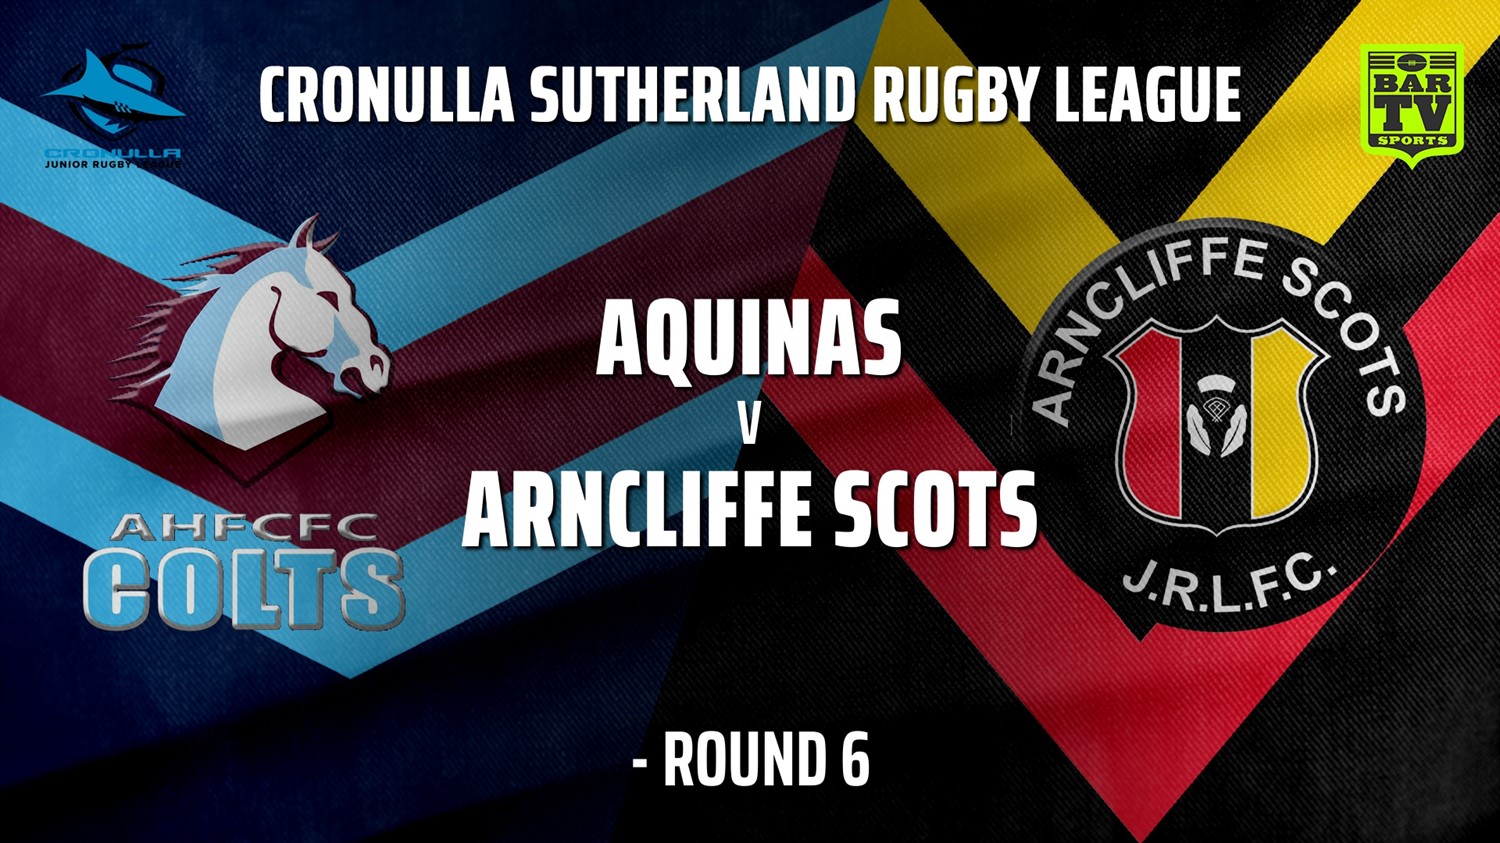 210606-Cronulla JRL - Under 14s Silver Round 6 - Aquinas Colts v Arncliffe Scots Slate Image